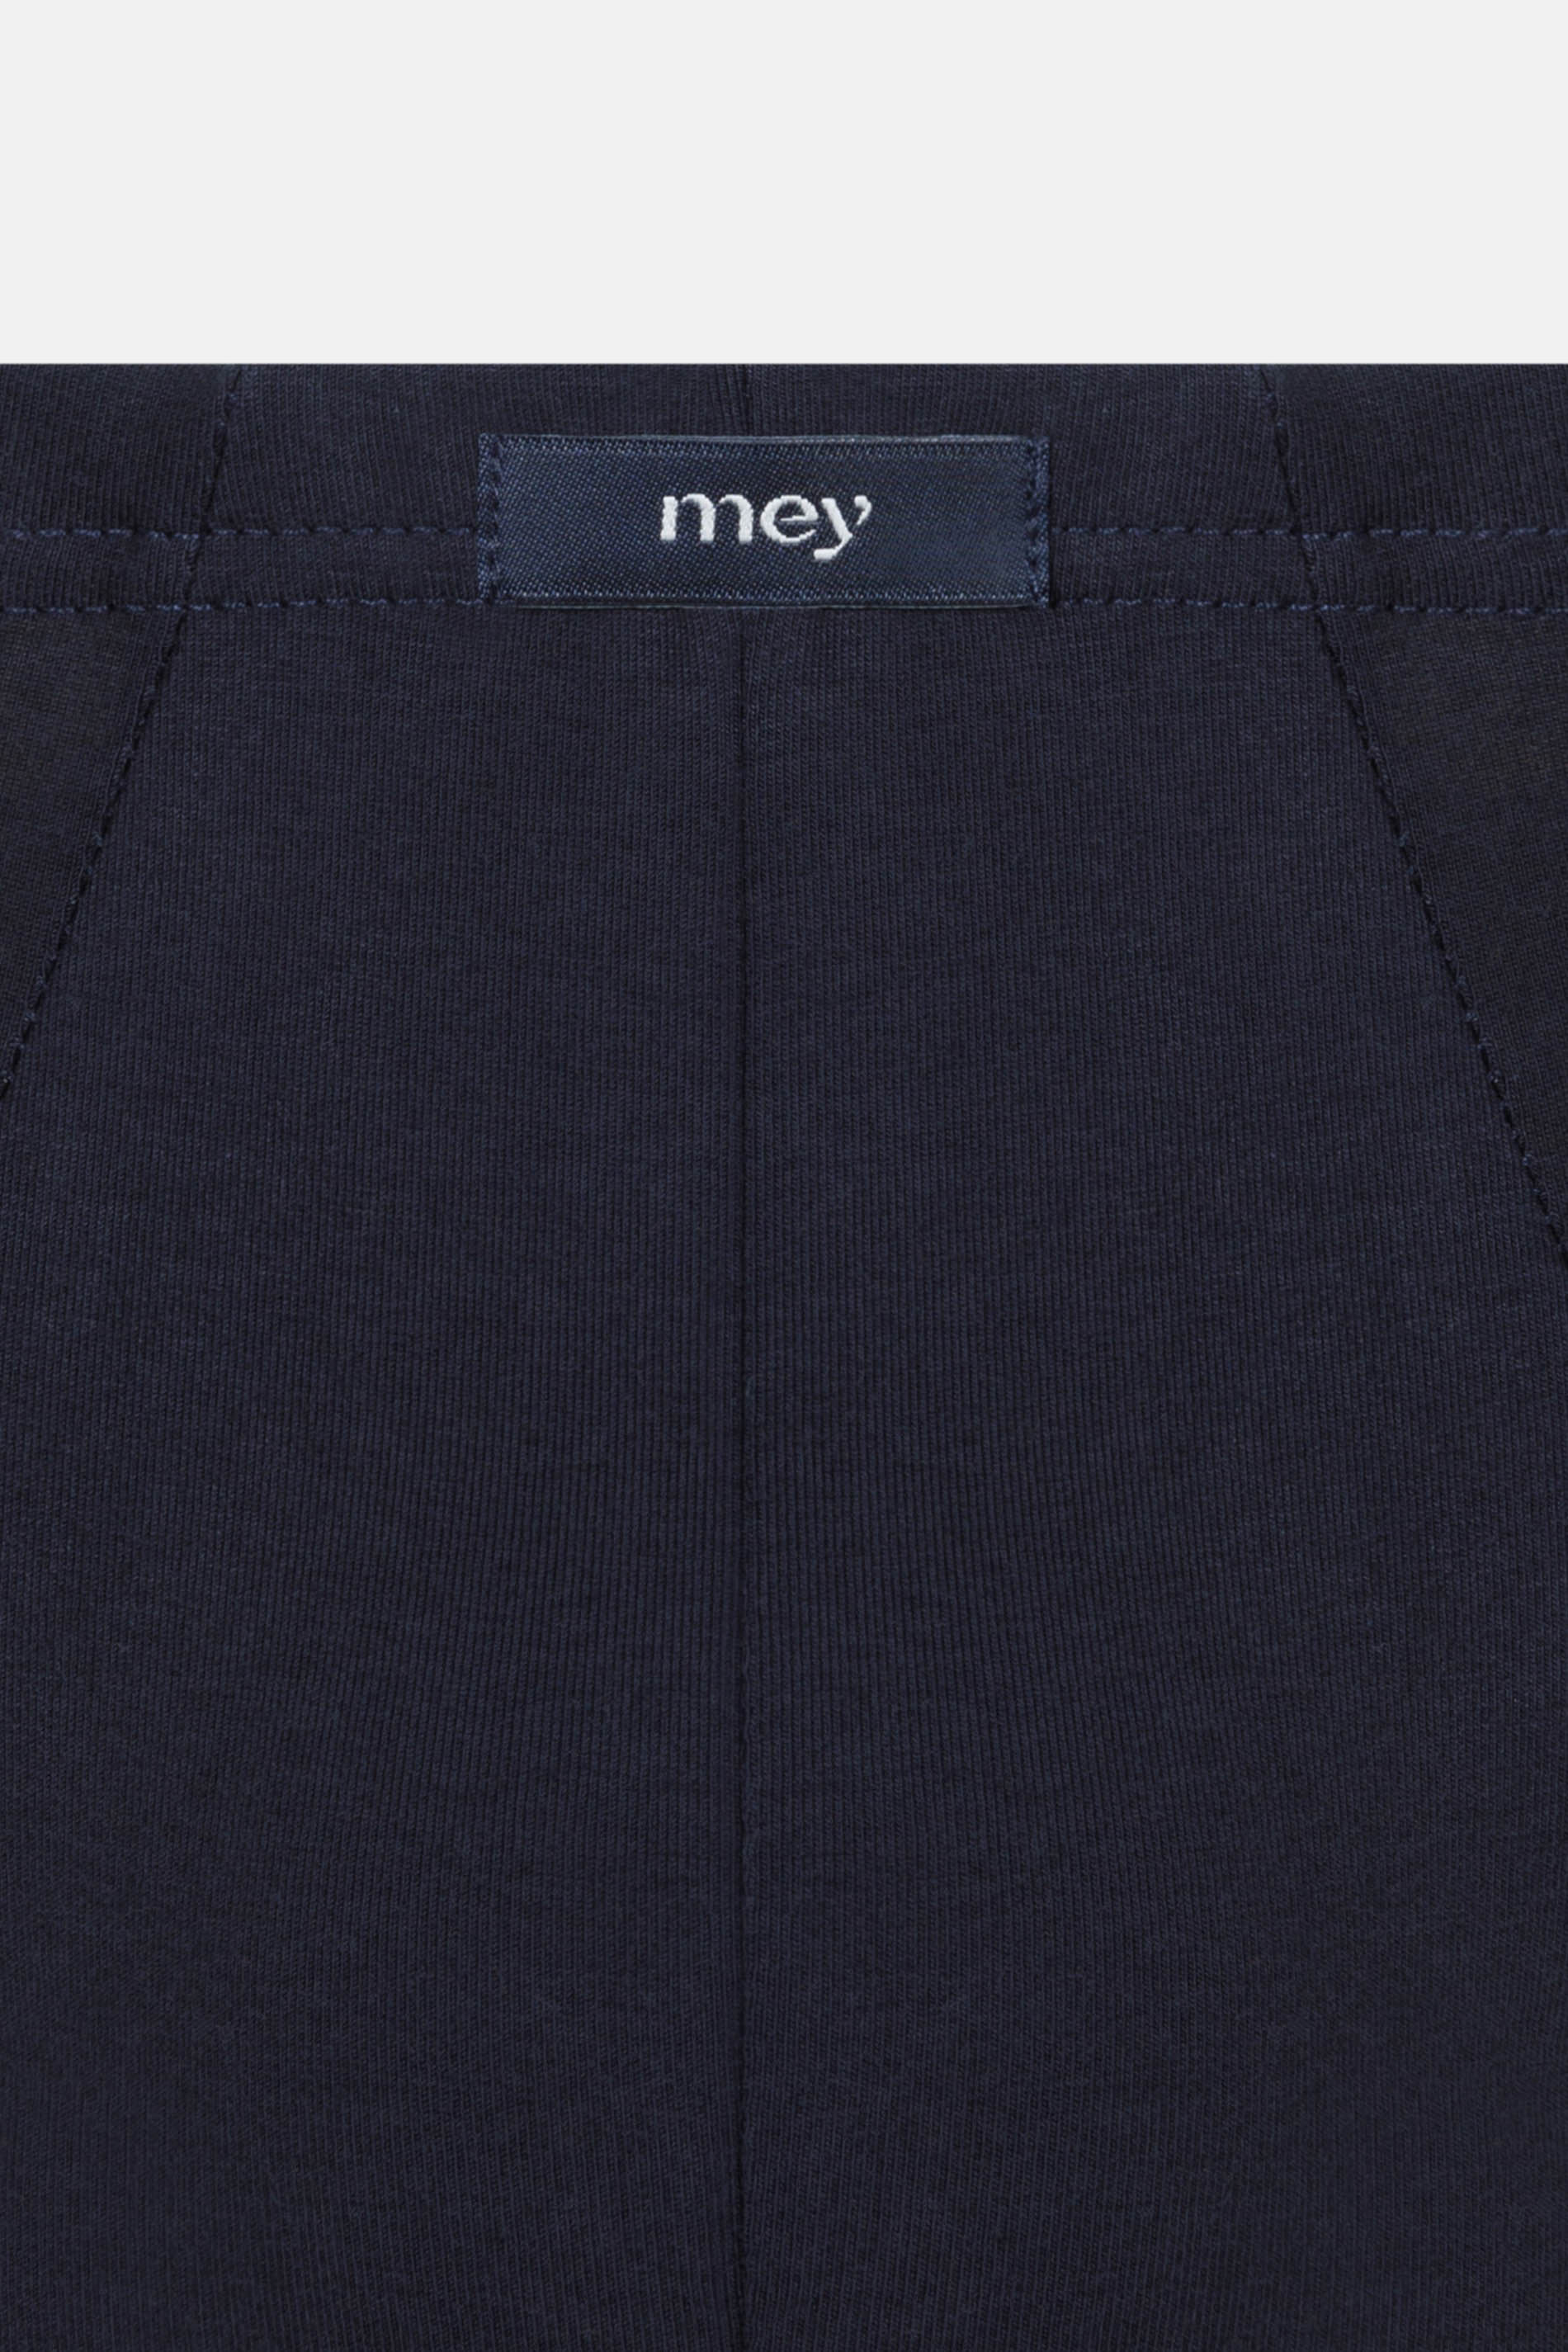 Shorty | Doppelpack Serie Jersey blue Farbe blau | mey®